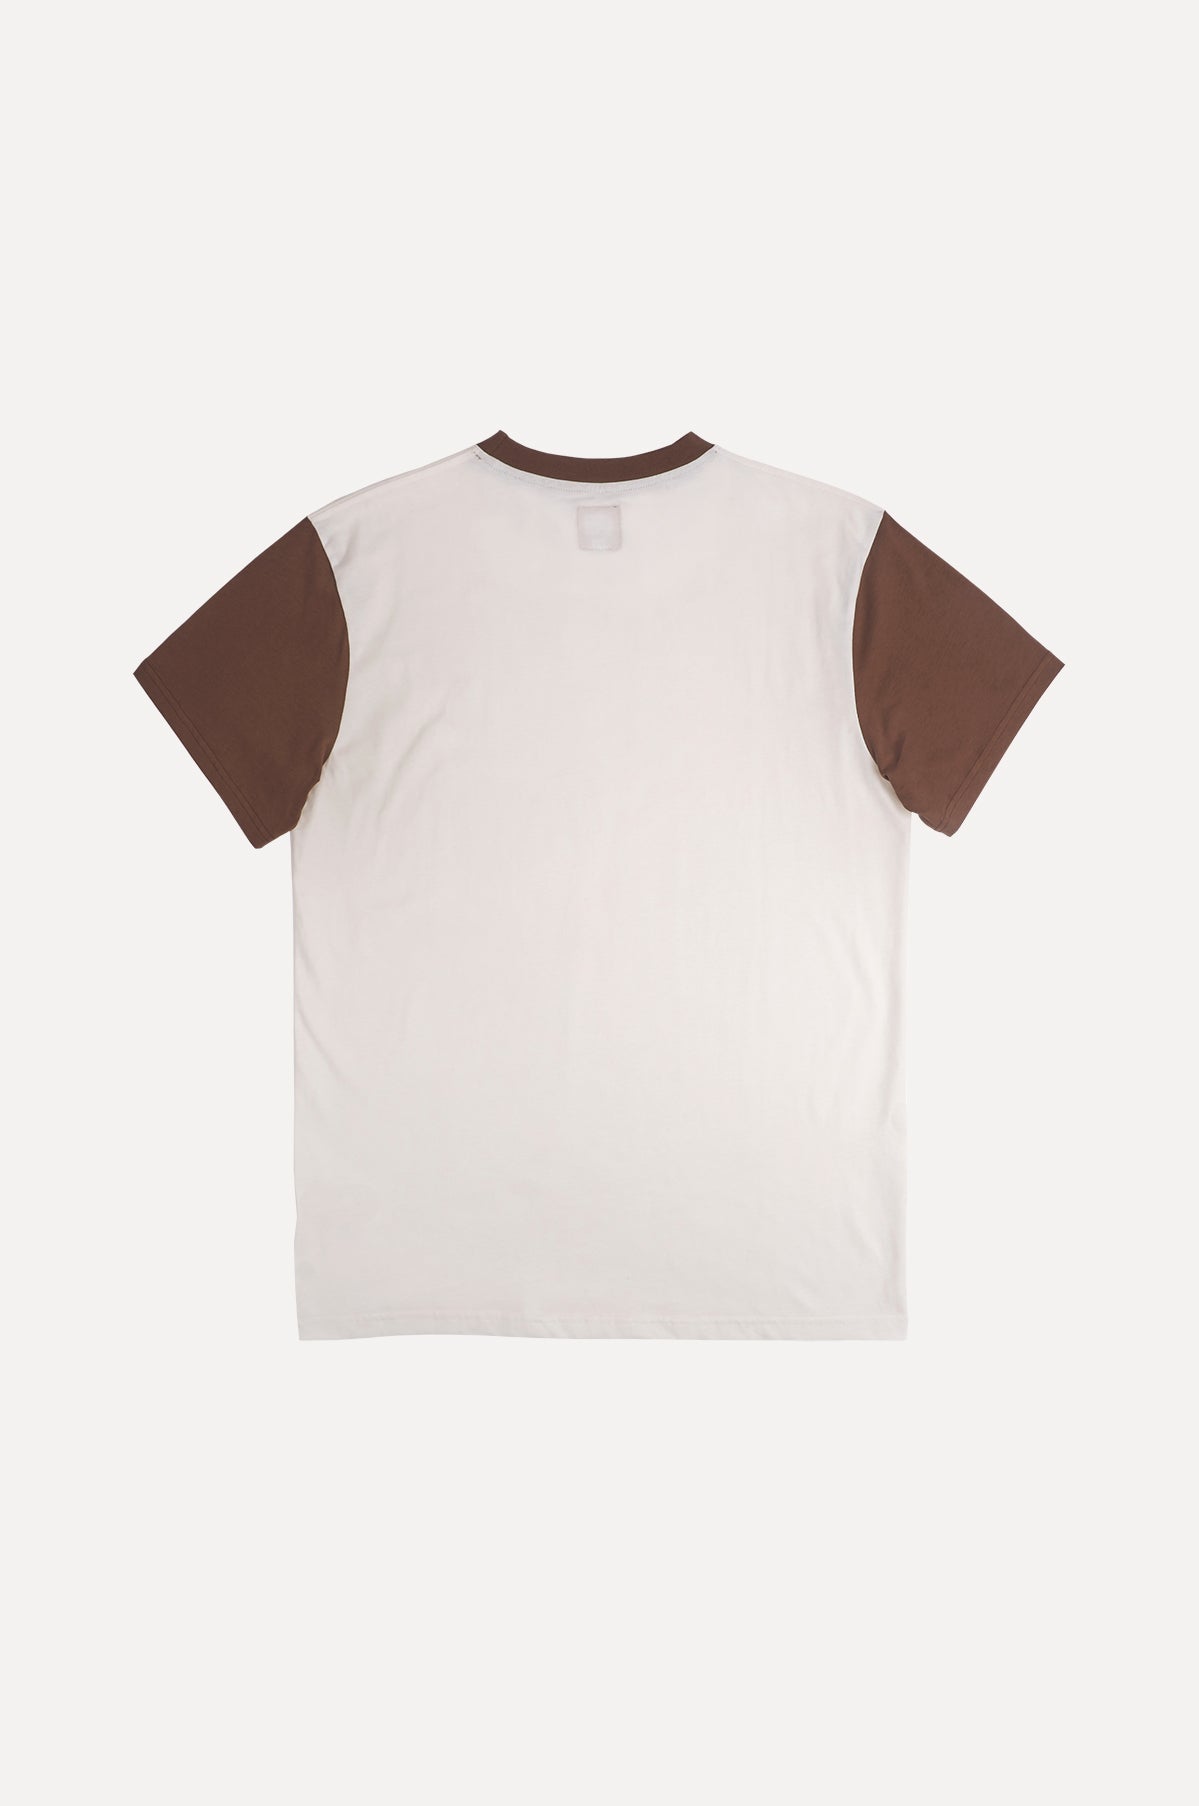 Camiseta Color Block Cocoa Brown